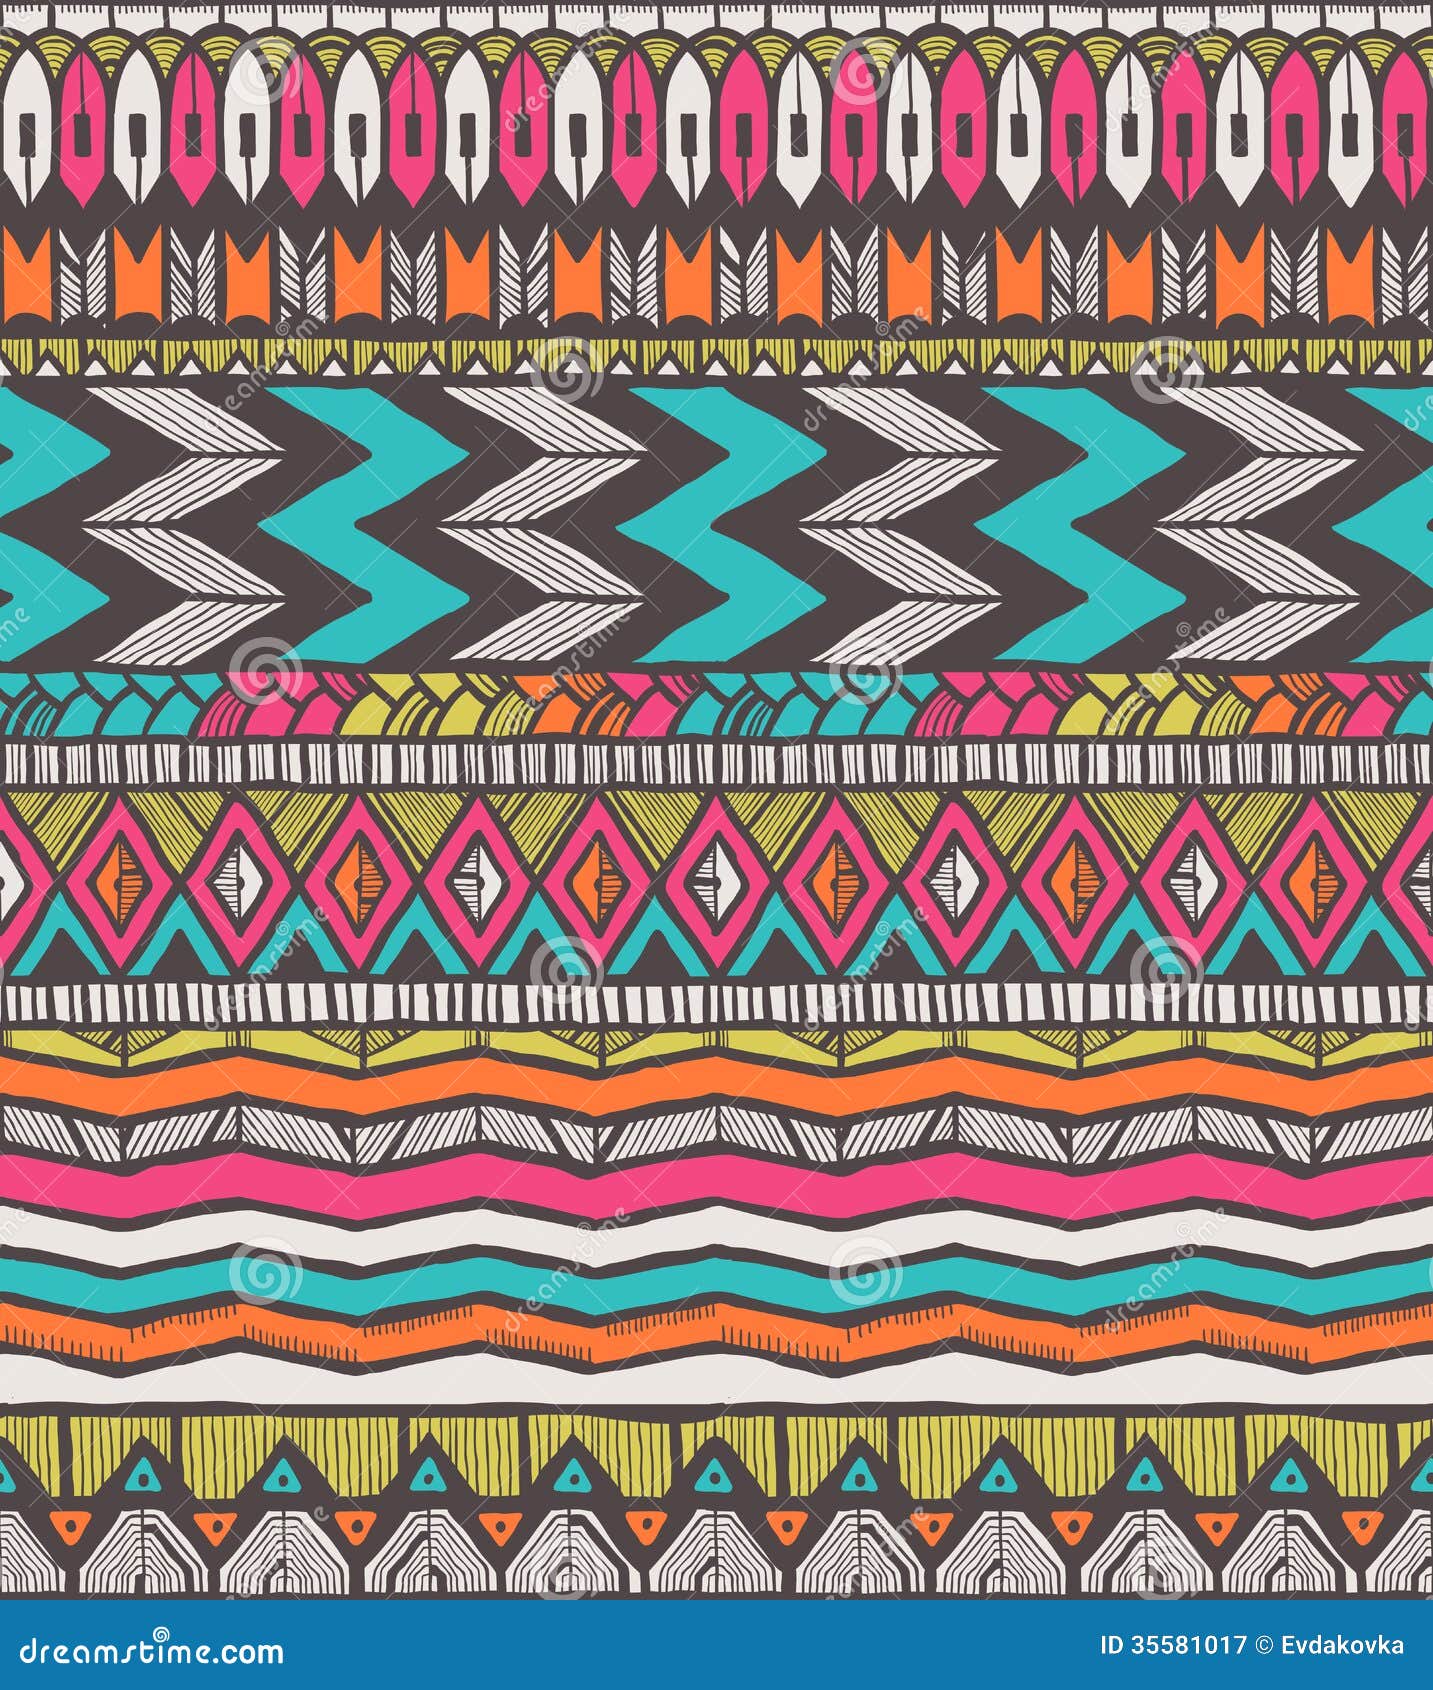 Tribal pattern stock illustration. Illustration of backdrop - 35581017